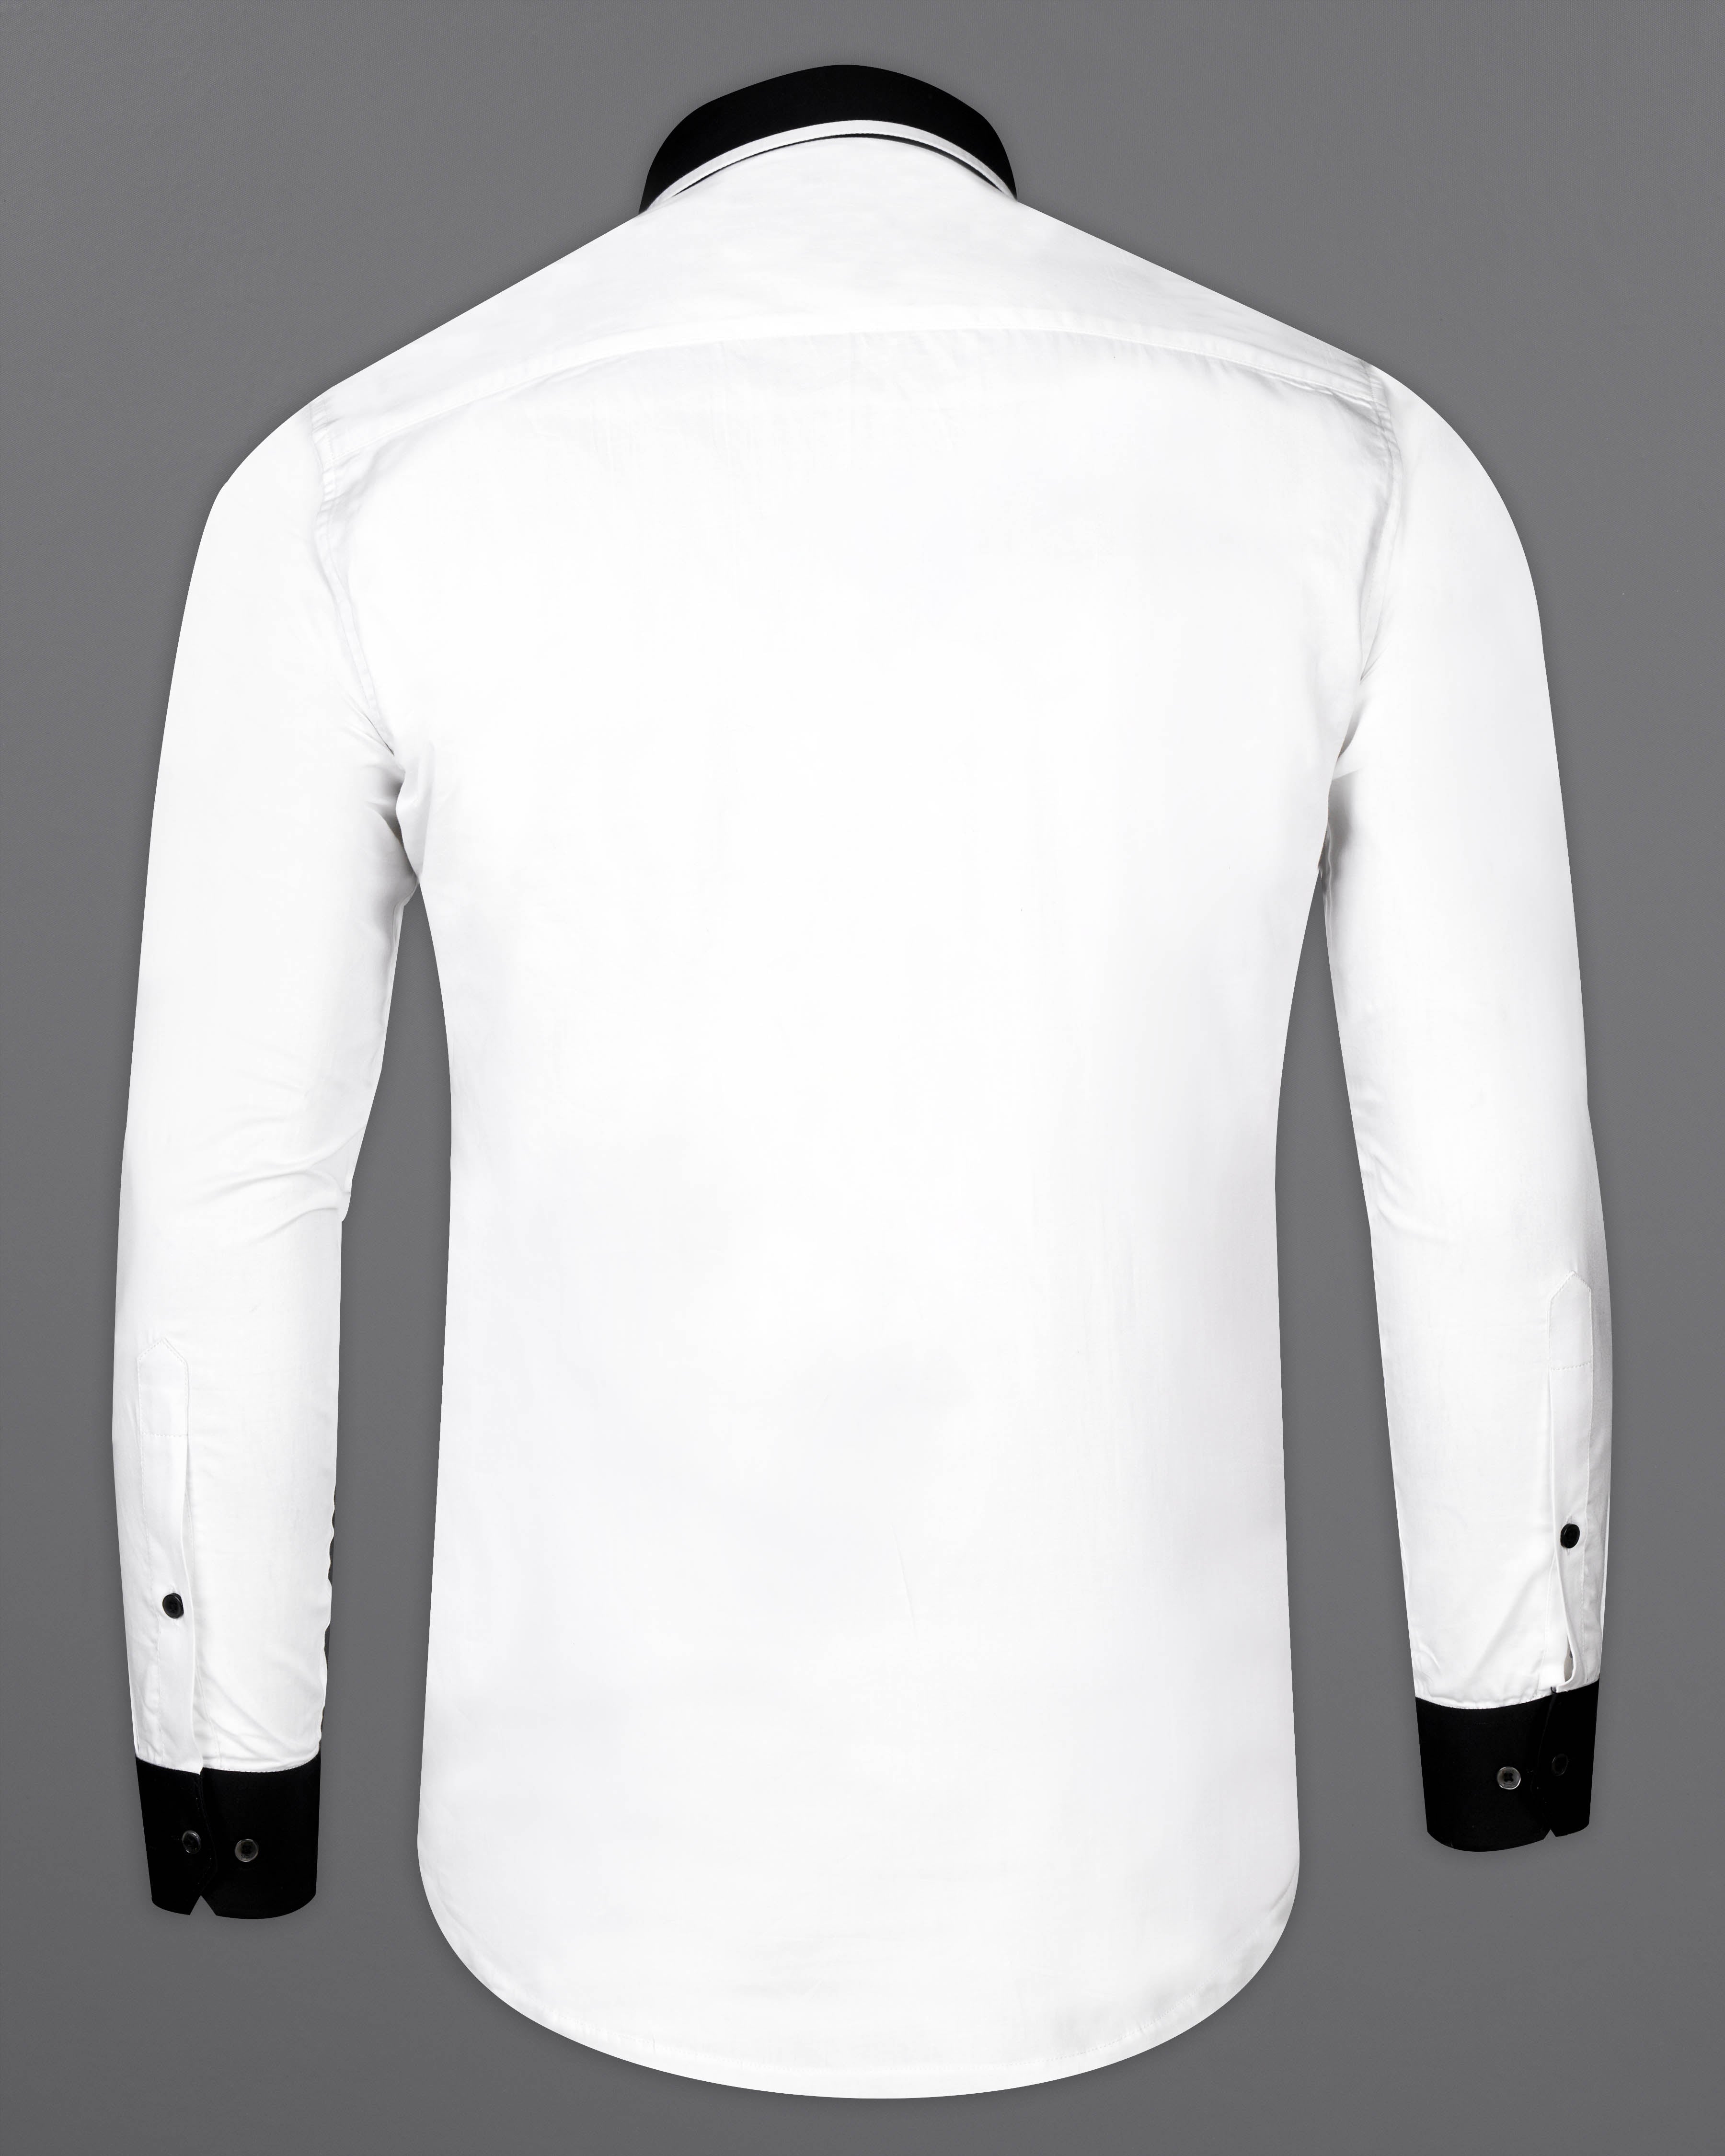 Bright White Super Soft Premium Cotton Designer Shirt with Black Collar and Cuffs 9730-BCC-ZP-P76-38, 9730-BCC-ZP-P76-H-38, 9730-BCC-ZP-P76-39, 9730-BCC-ZP-P76-H-39, 9730-BCC-ZP-P76-40, 9730-BCC-ZP-P76-H-40, 9730-BCC-ZP-P76-42, 9730-BCC-ZP-P76-H-42, 9730-BCC-ZP-P76-44, 9730-BCC-ZP-P76-H-44, 9730-BCC-ZP-P76-46, 9730-BCC-ZP-P76-H-46, 9730-BCC-ZP-P76-48, 9730-BCC-ZP-P76-H-48, 9730-BCC-ZP-P76-50, 9730-BCC-ZP-P76-H-50, 9730-BCC-ZP-P76-52, 9730-BCC-ZP-P76-H-52